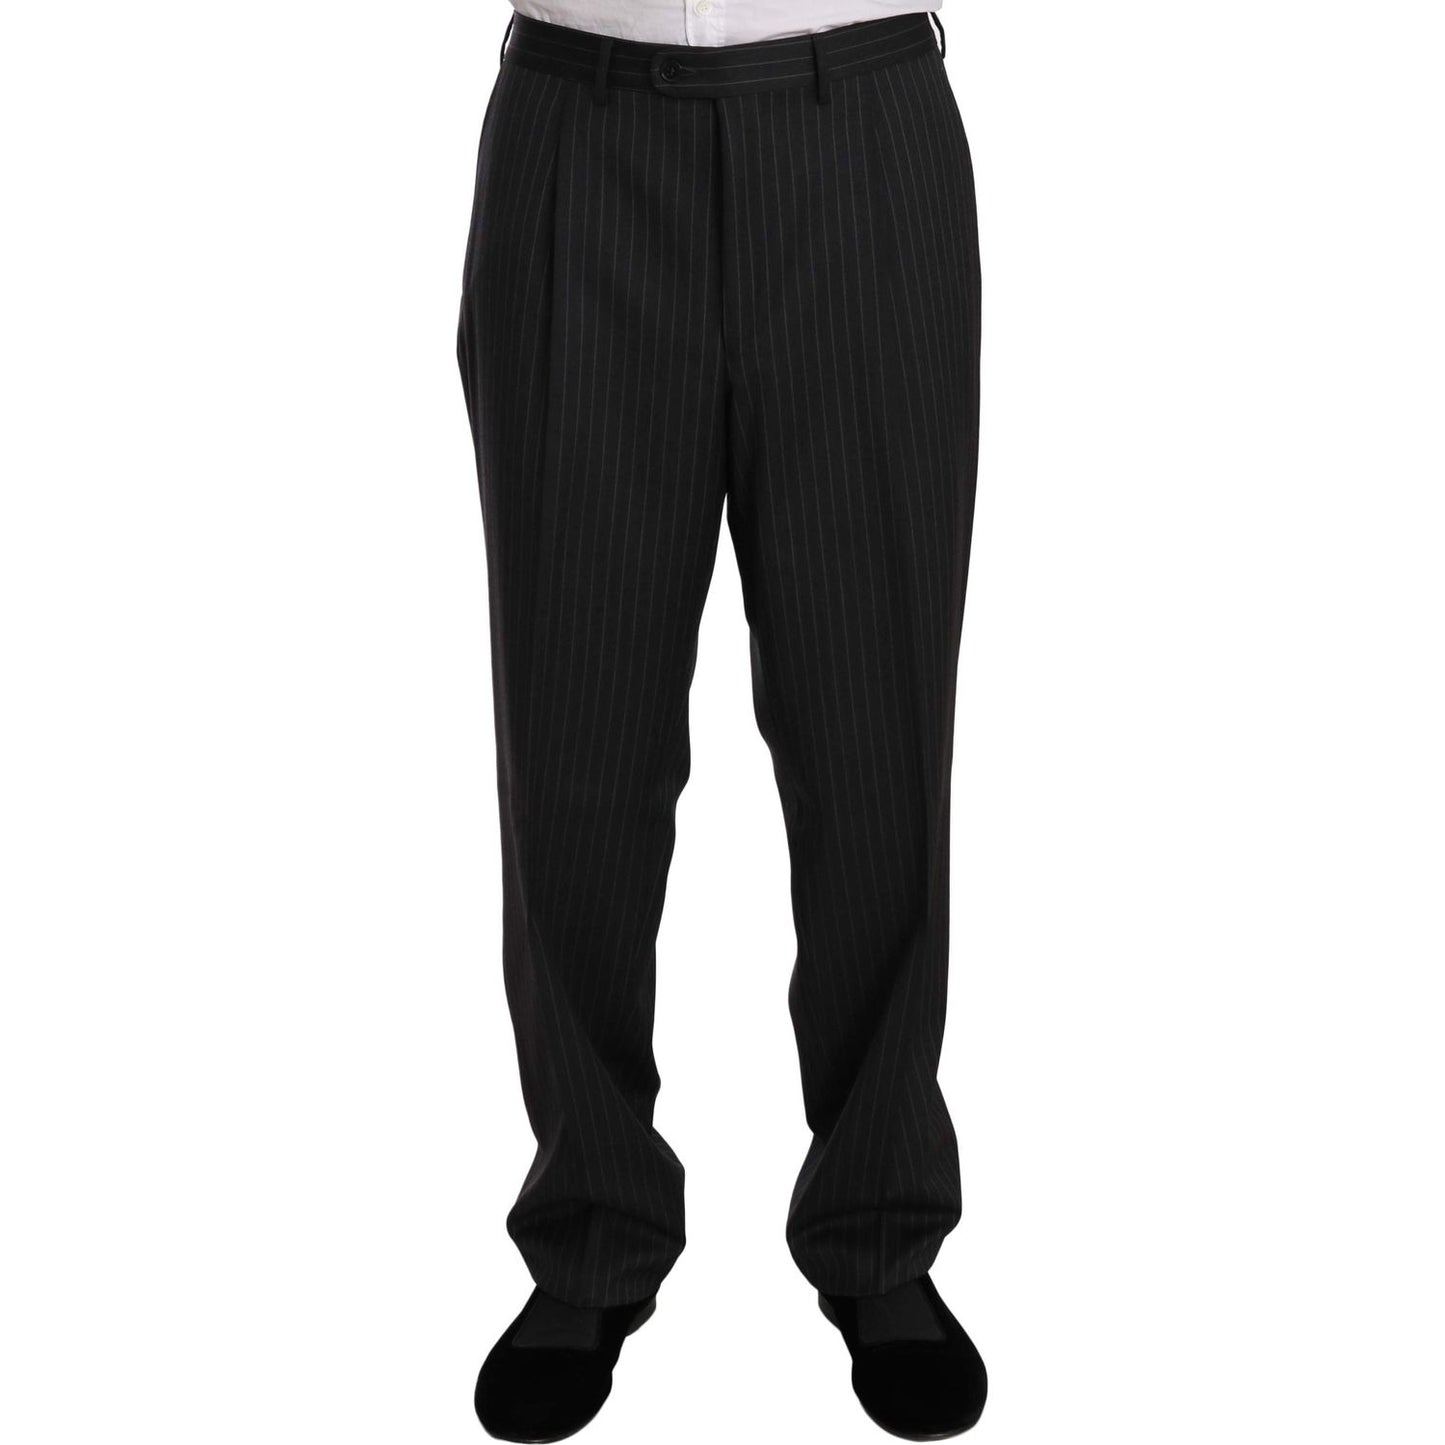 Z ZEGNA | Black Striped Two Piece 3 Button 100% Wool Suit | McRichard Designer Brands